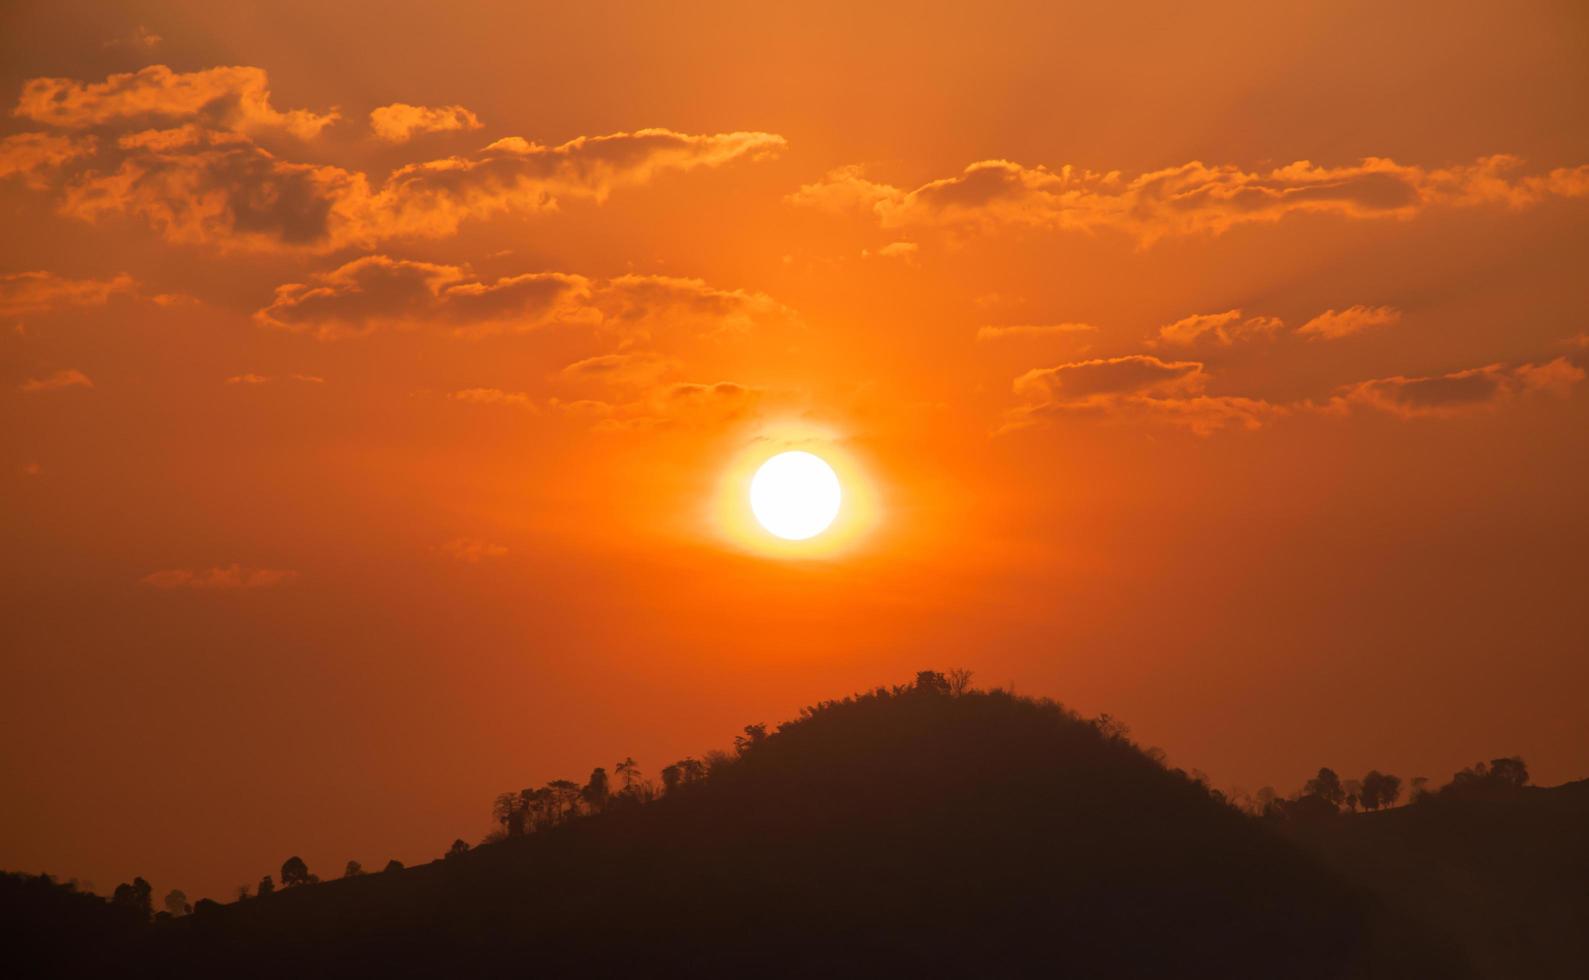 de Sol på de orange himmel i de morgon- och de berg se foto